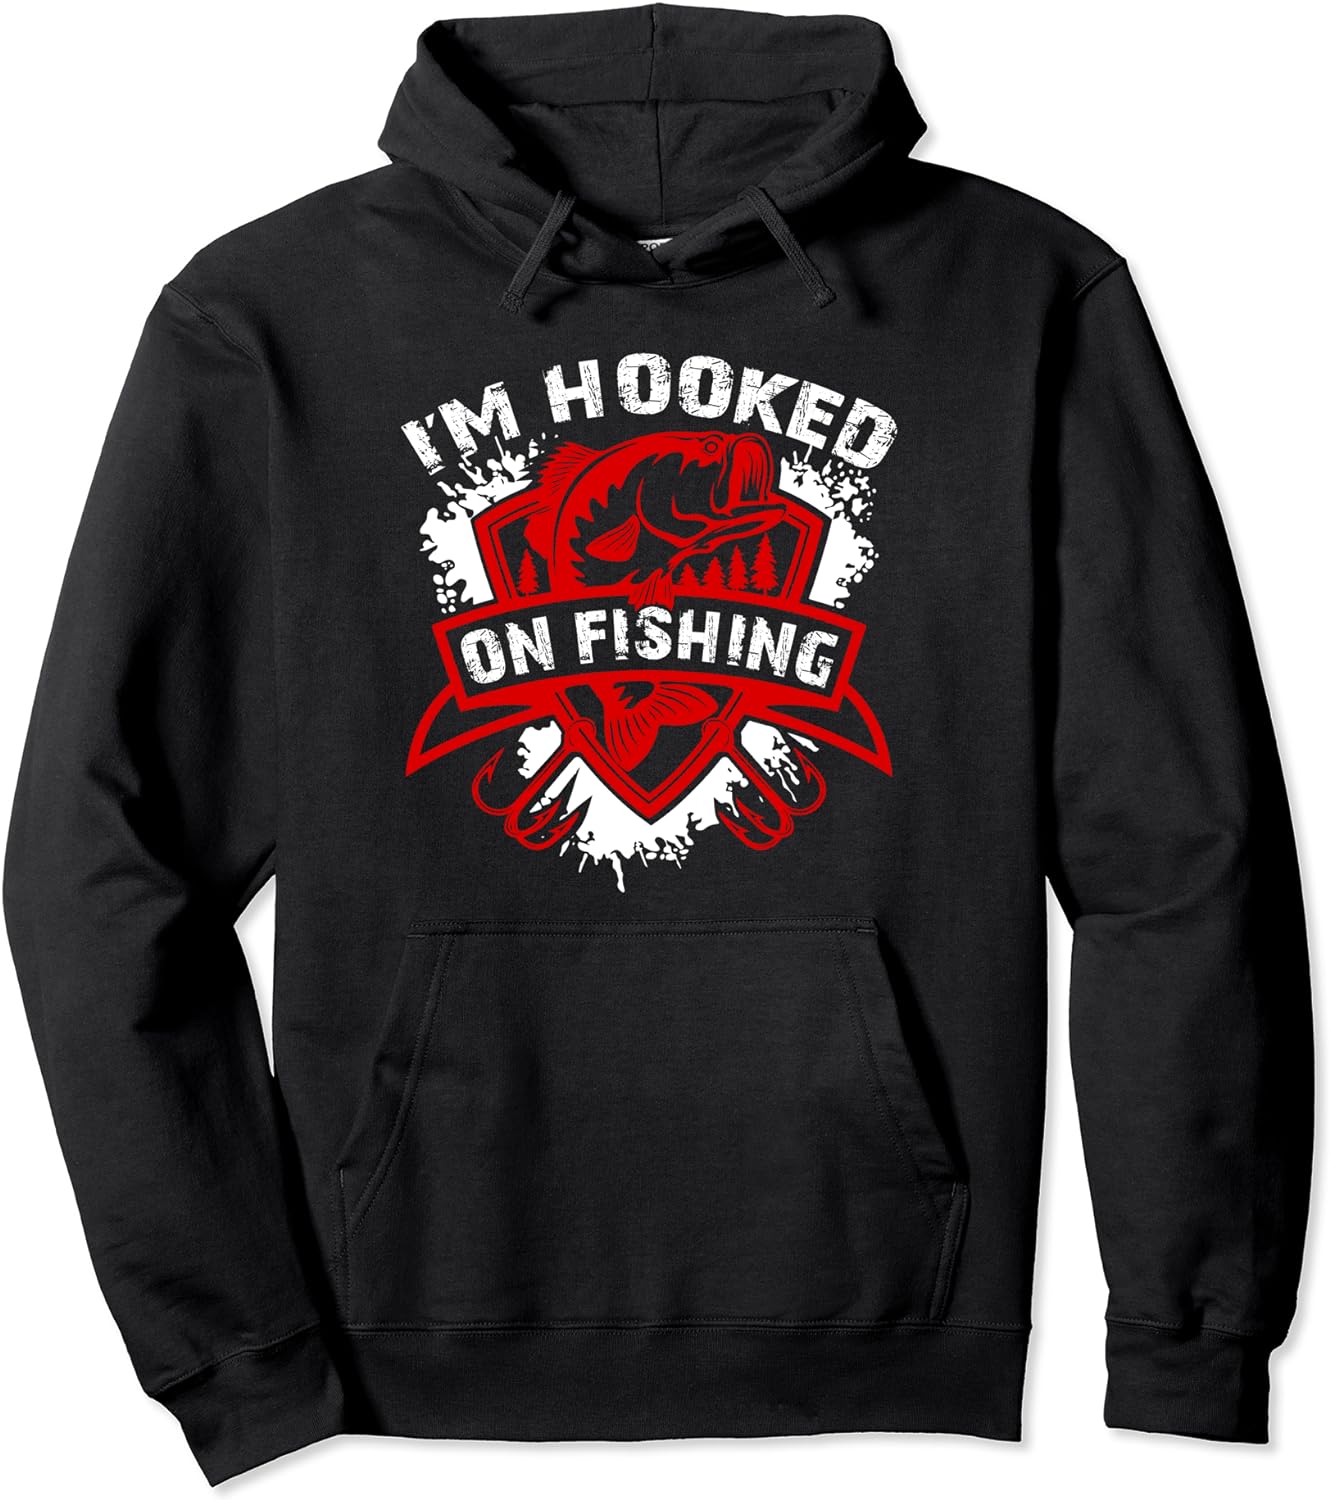 I’m Hooked on Fishing Hoodie